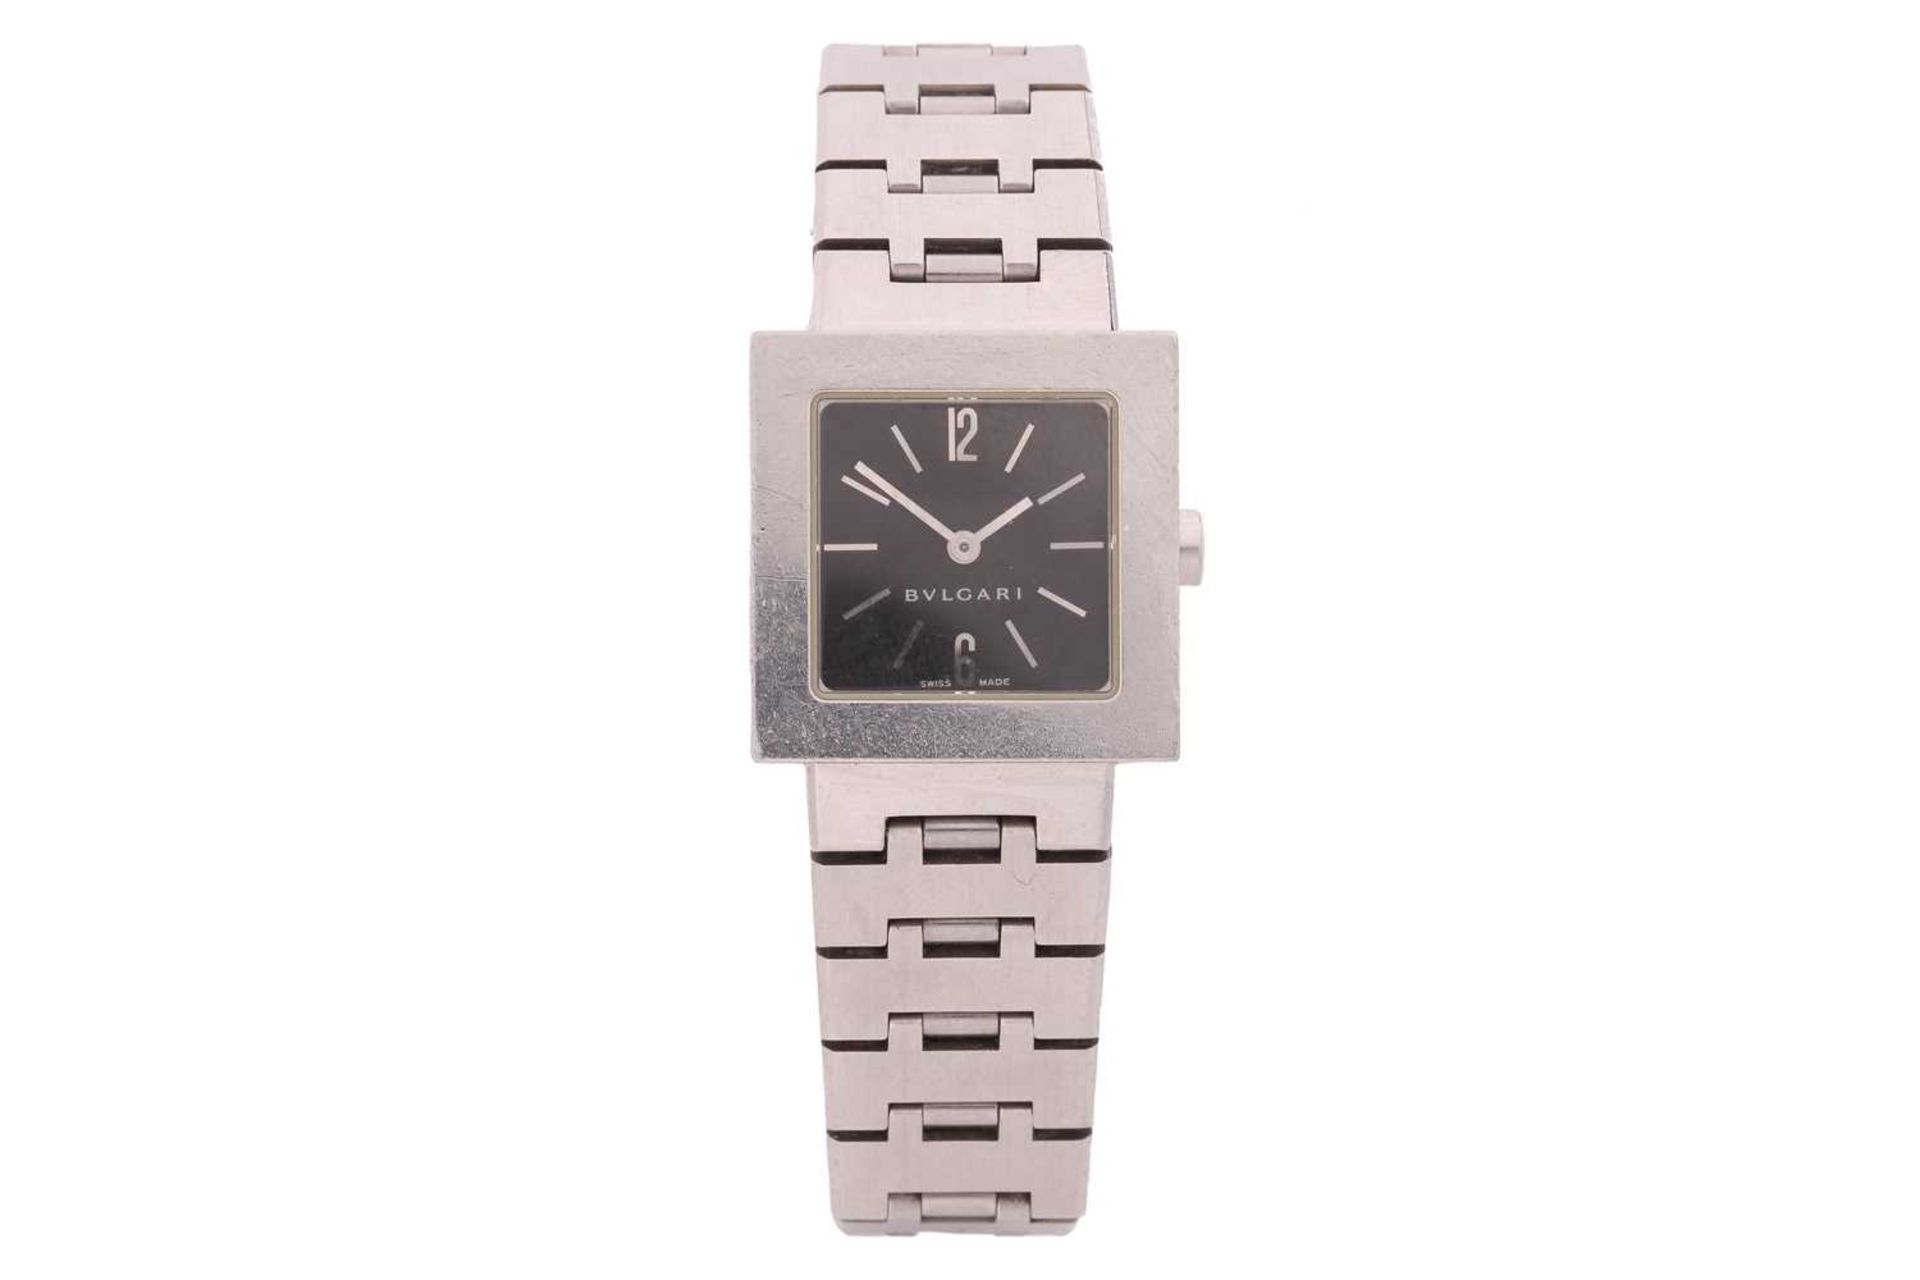 A Bulgari - Bvlgari Quadrato Ref. SQ22SS lady's wristwatch, featuring a Swiss-made quartz movement